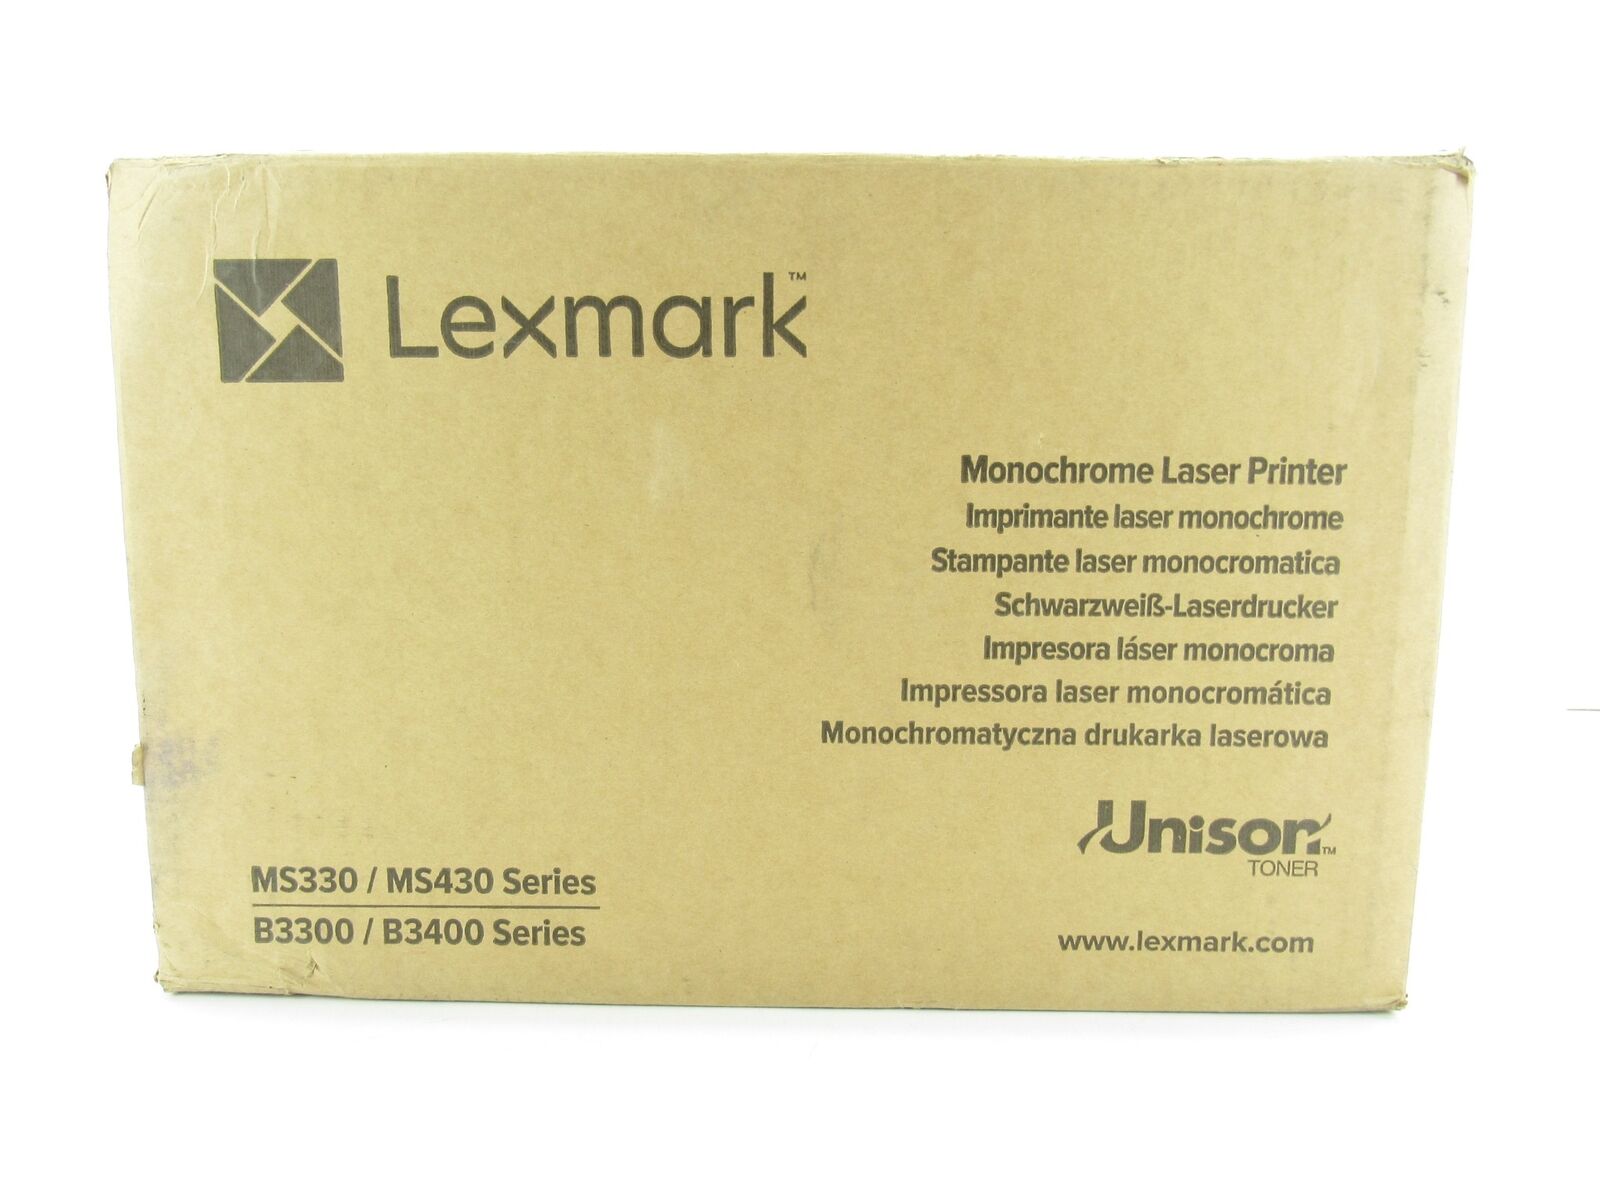 Lexmark B3340dw Monochrome Laser Printer (New In Box)